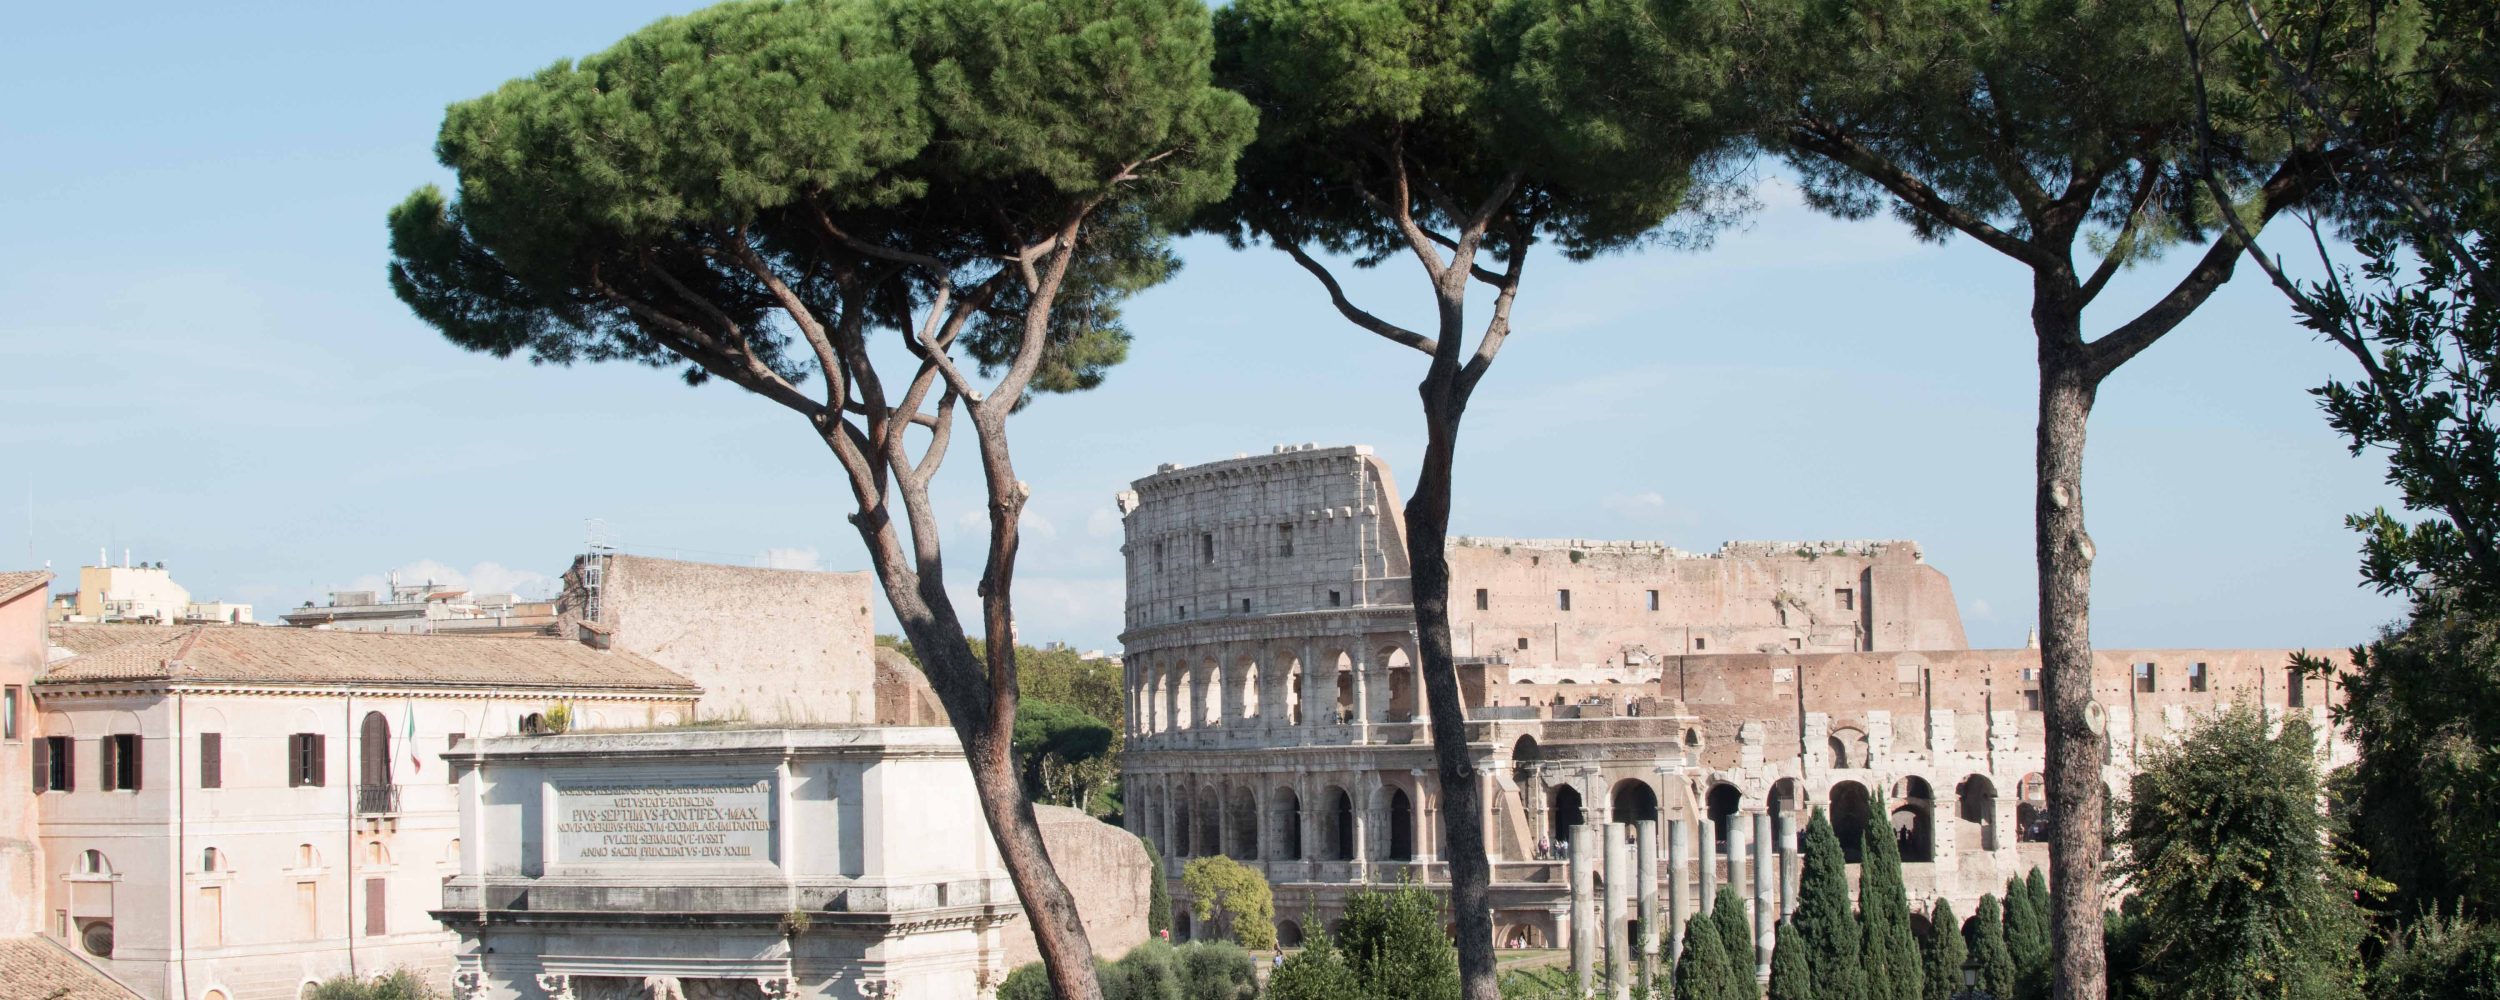 rimski Koloseum